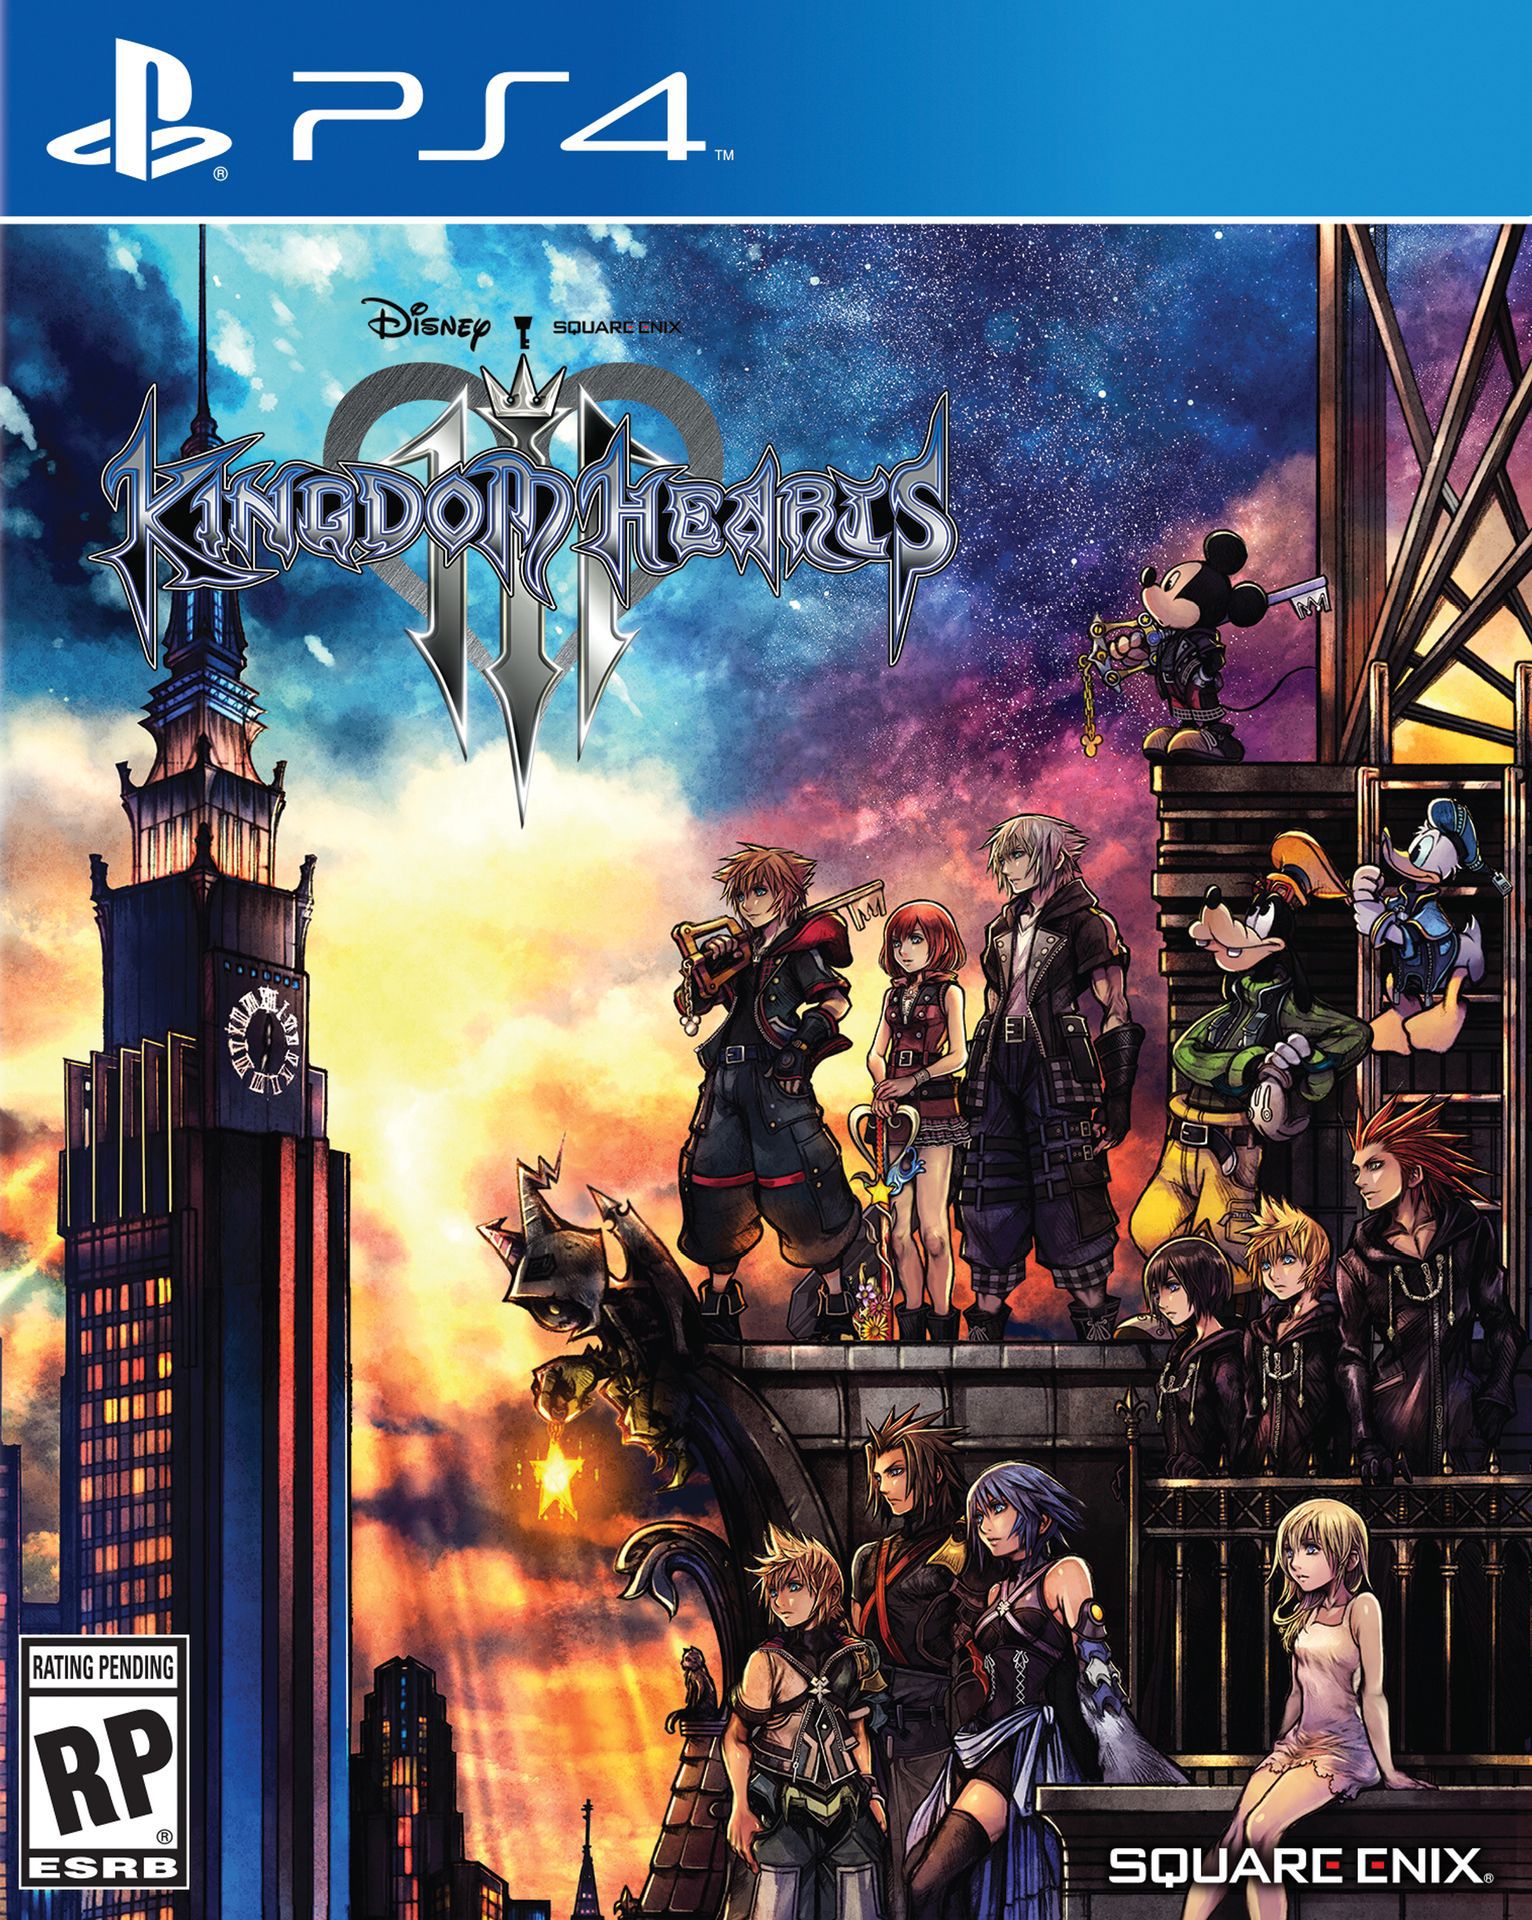 jaquette reduite de Kingdom Hearts III sur Playstation 4